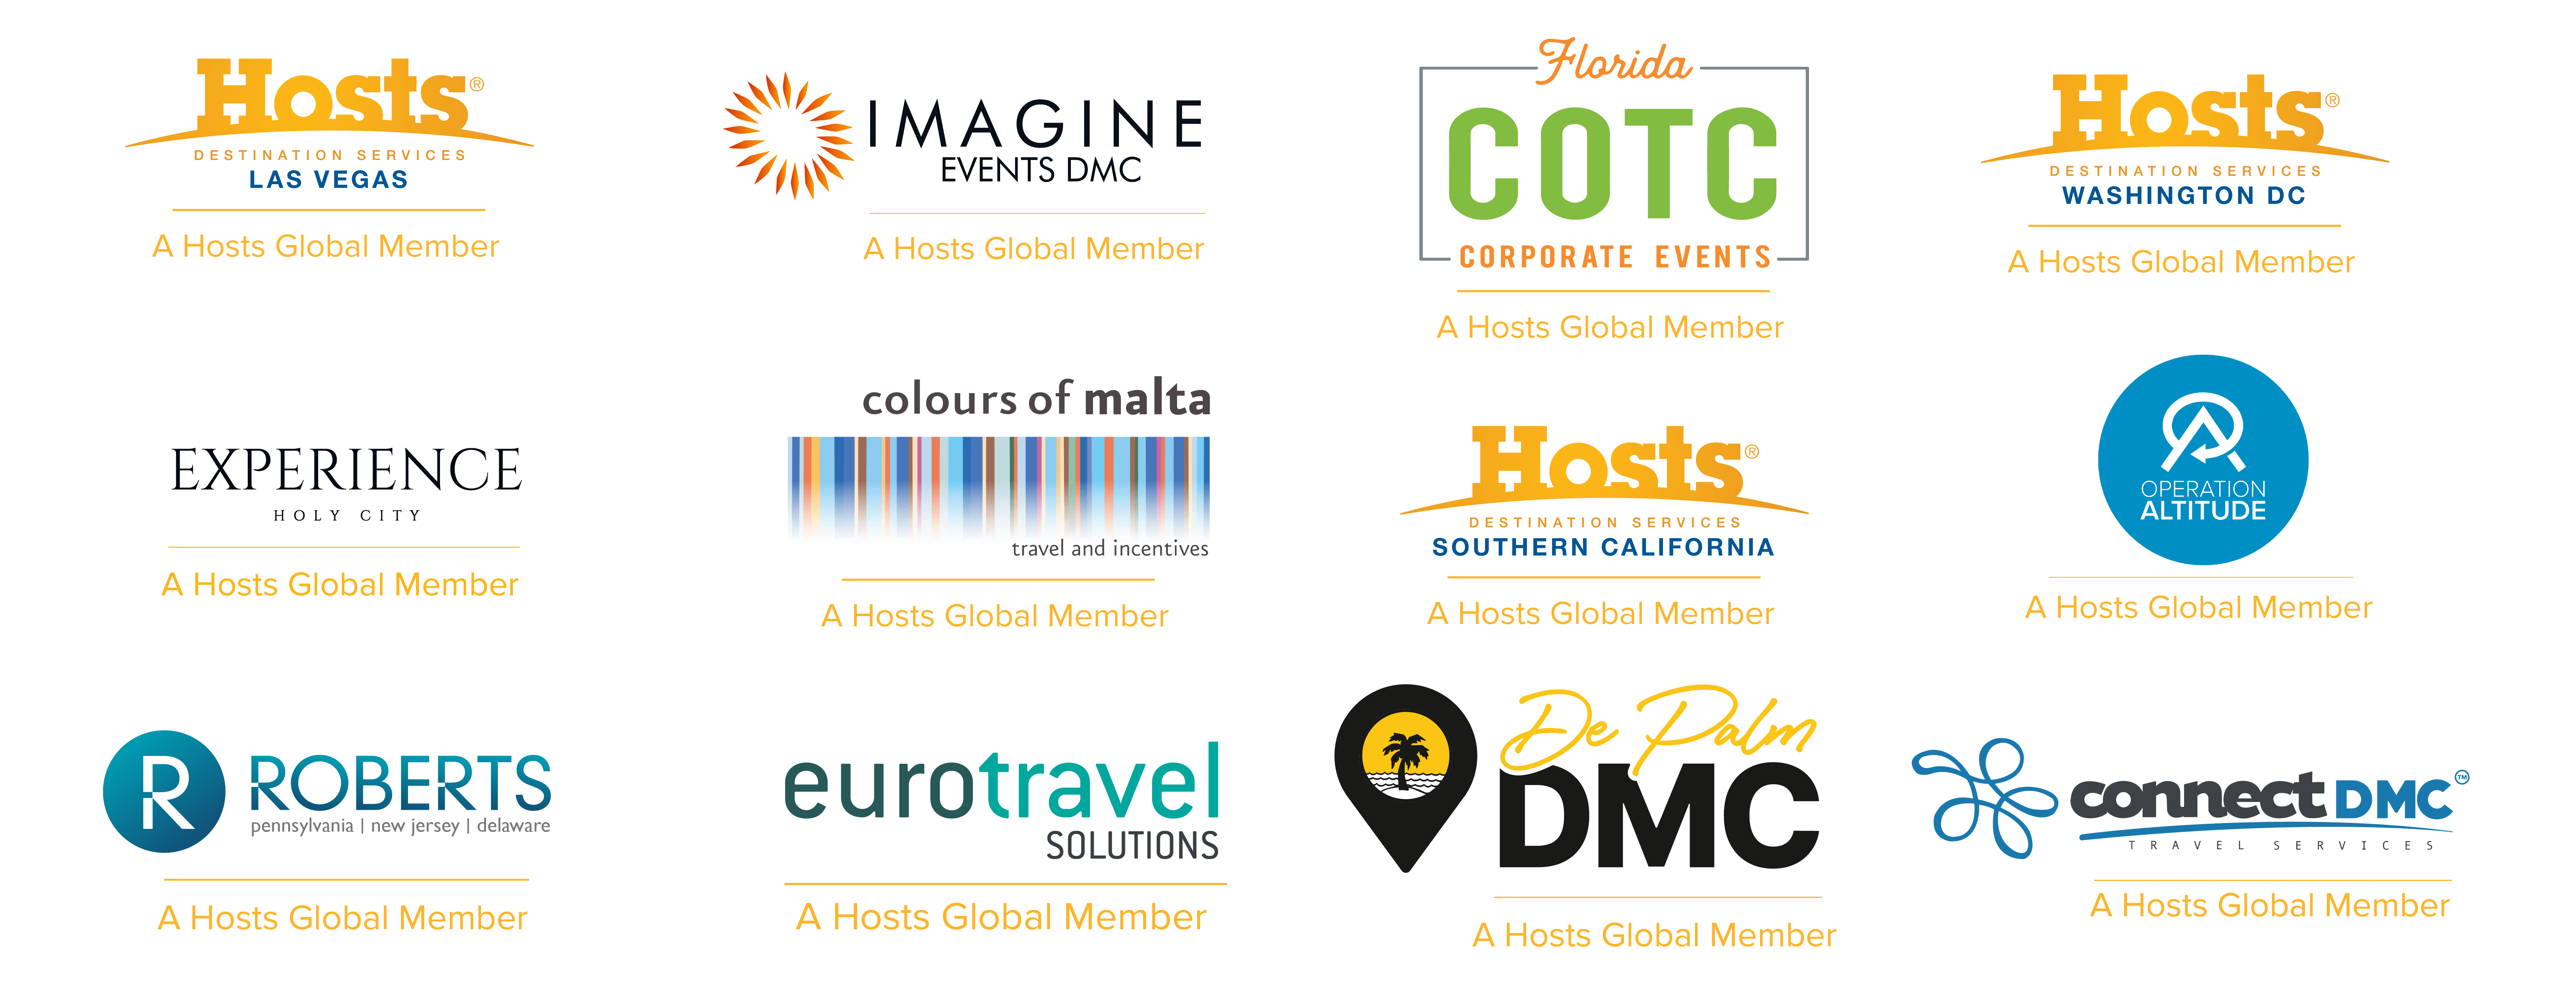 Hosts Global | Member Logos for Fiesta Design Edition